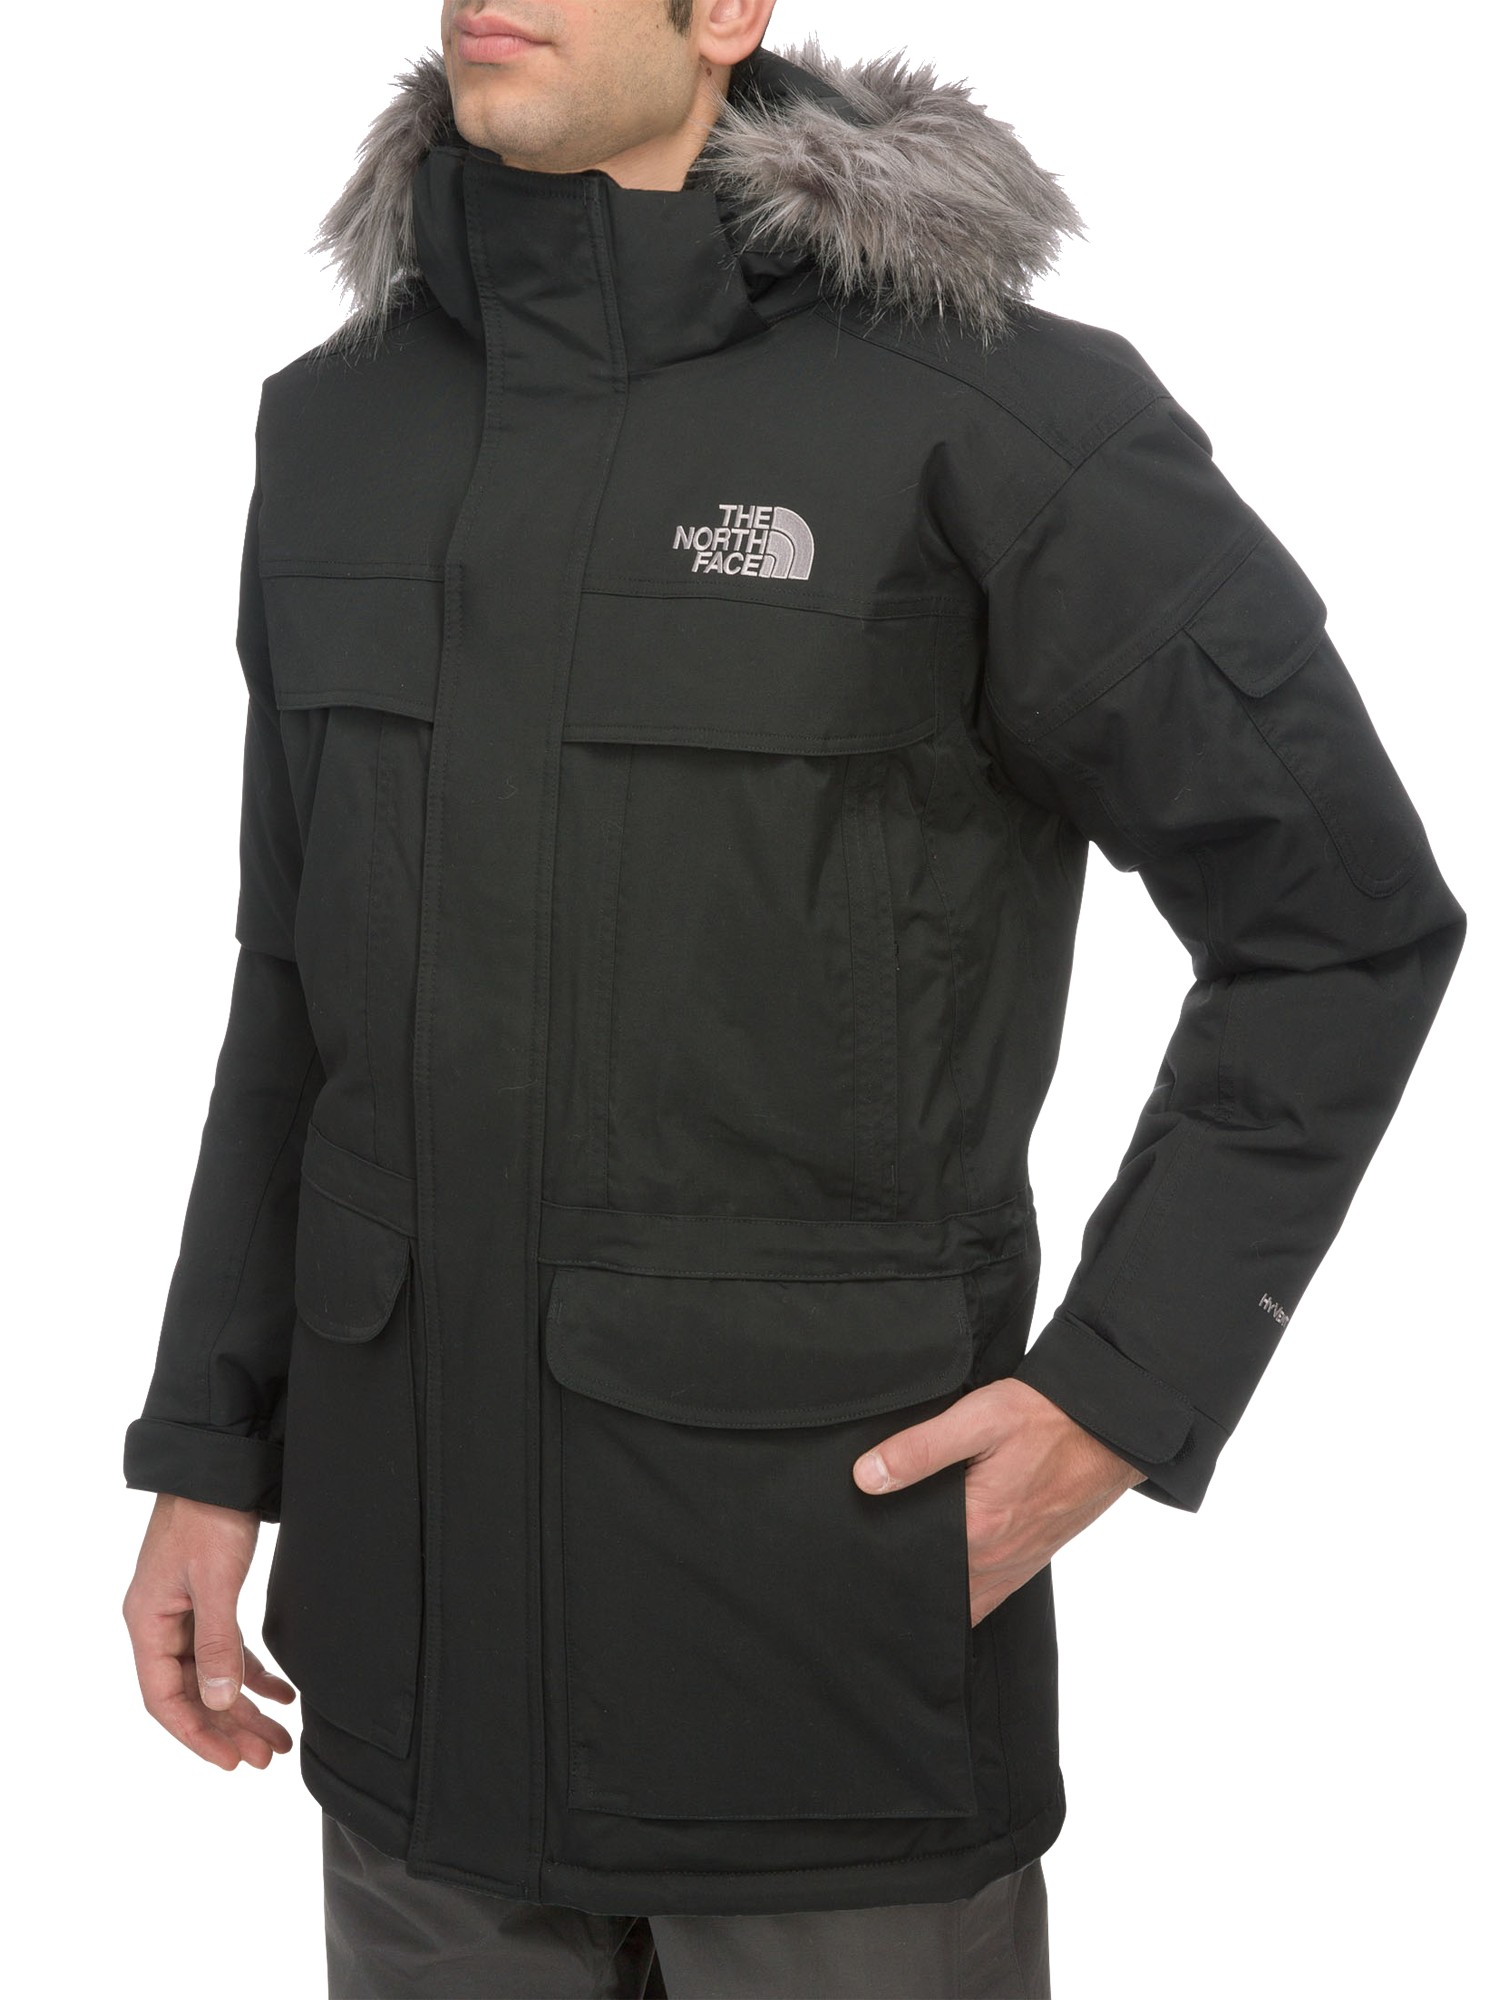 The North Face Men'S Mcmurdo Parka Jacket in Black for Men - Lyst